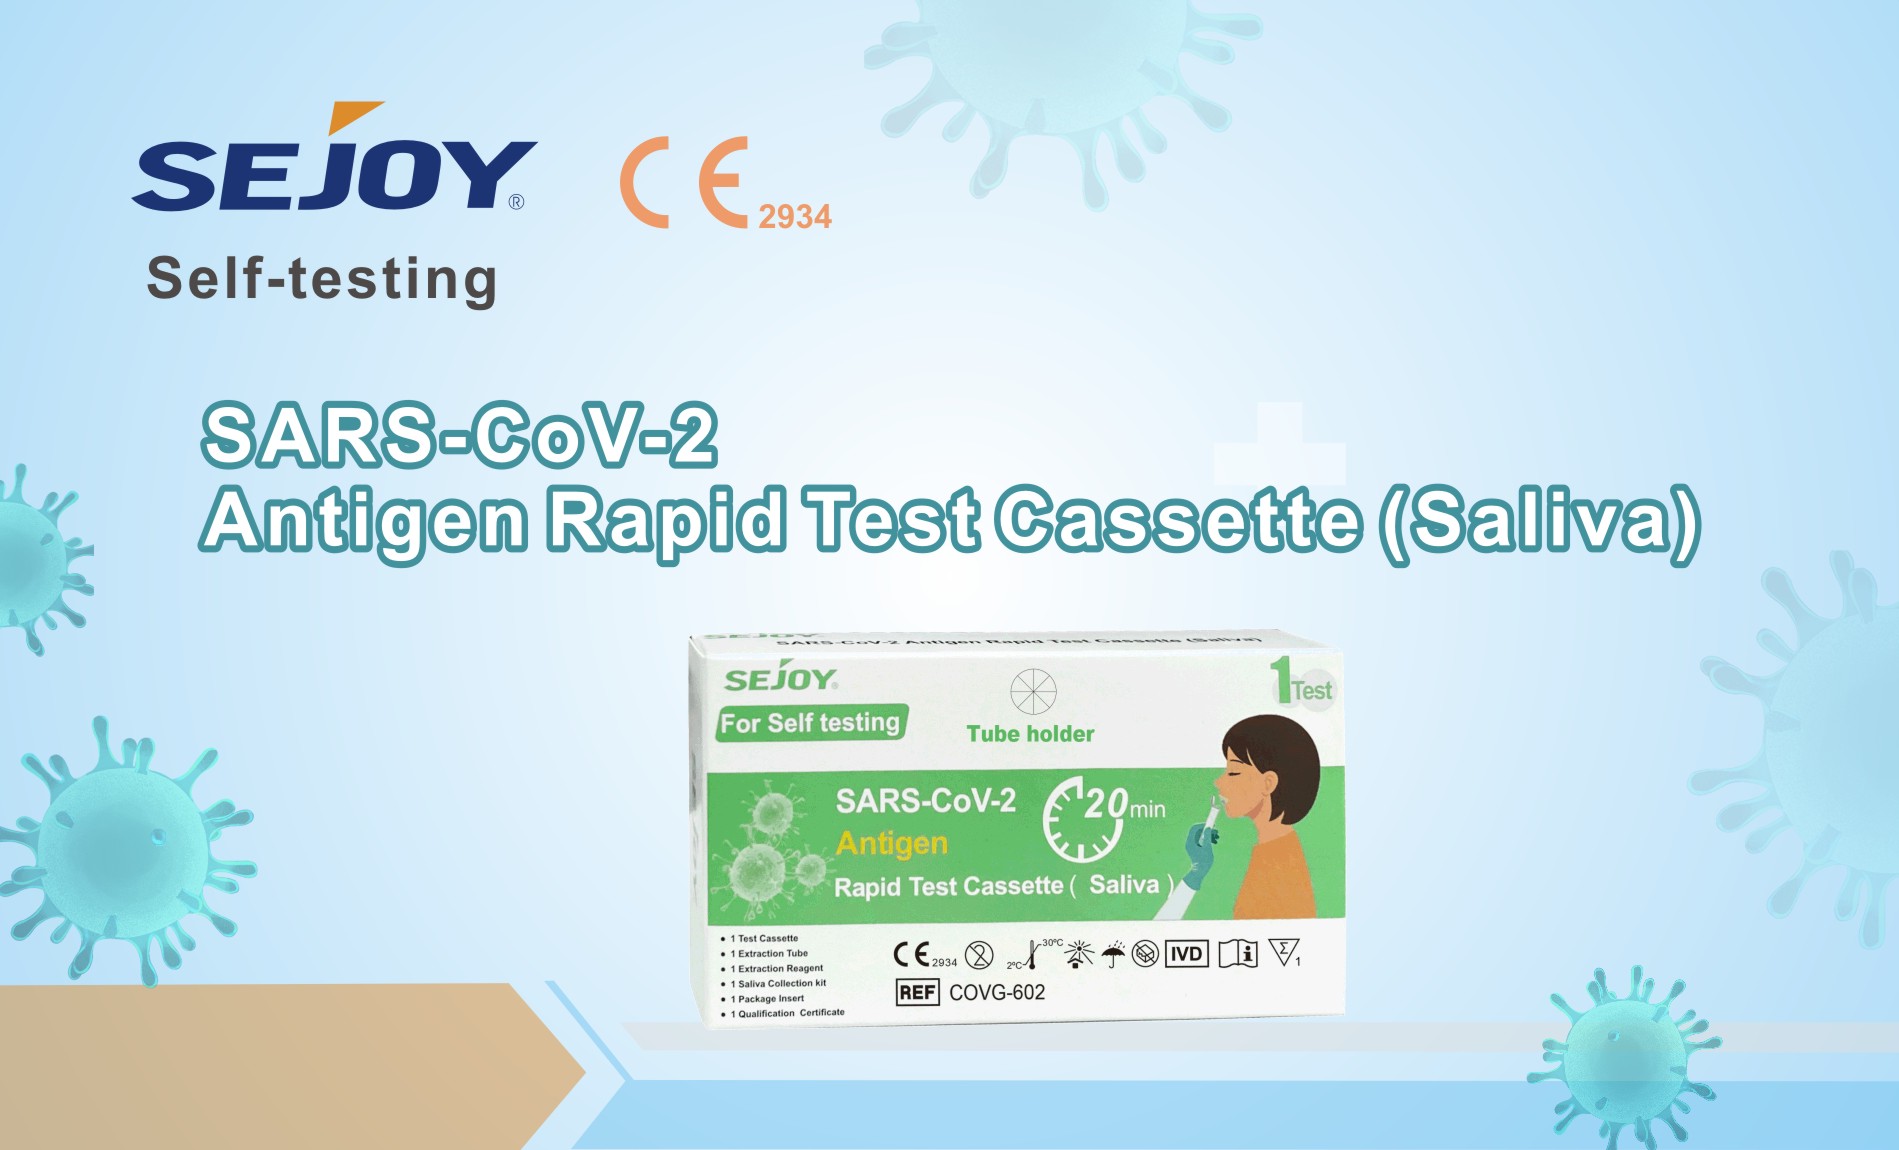 http://sejoy.com/sars-cov-2-antigen-rapid-test-cassette-saliva-product/